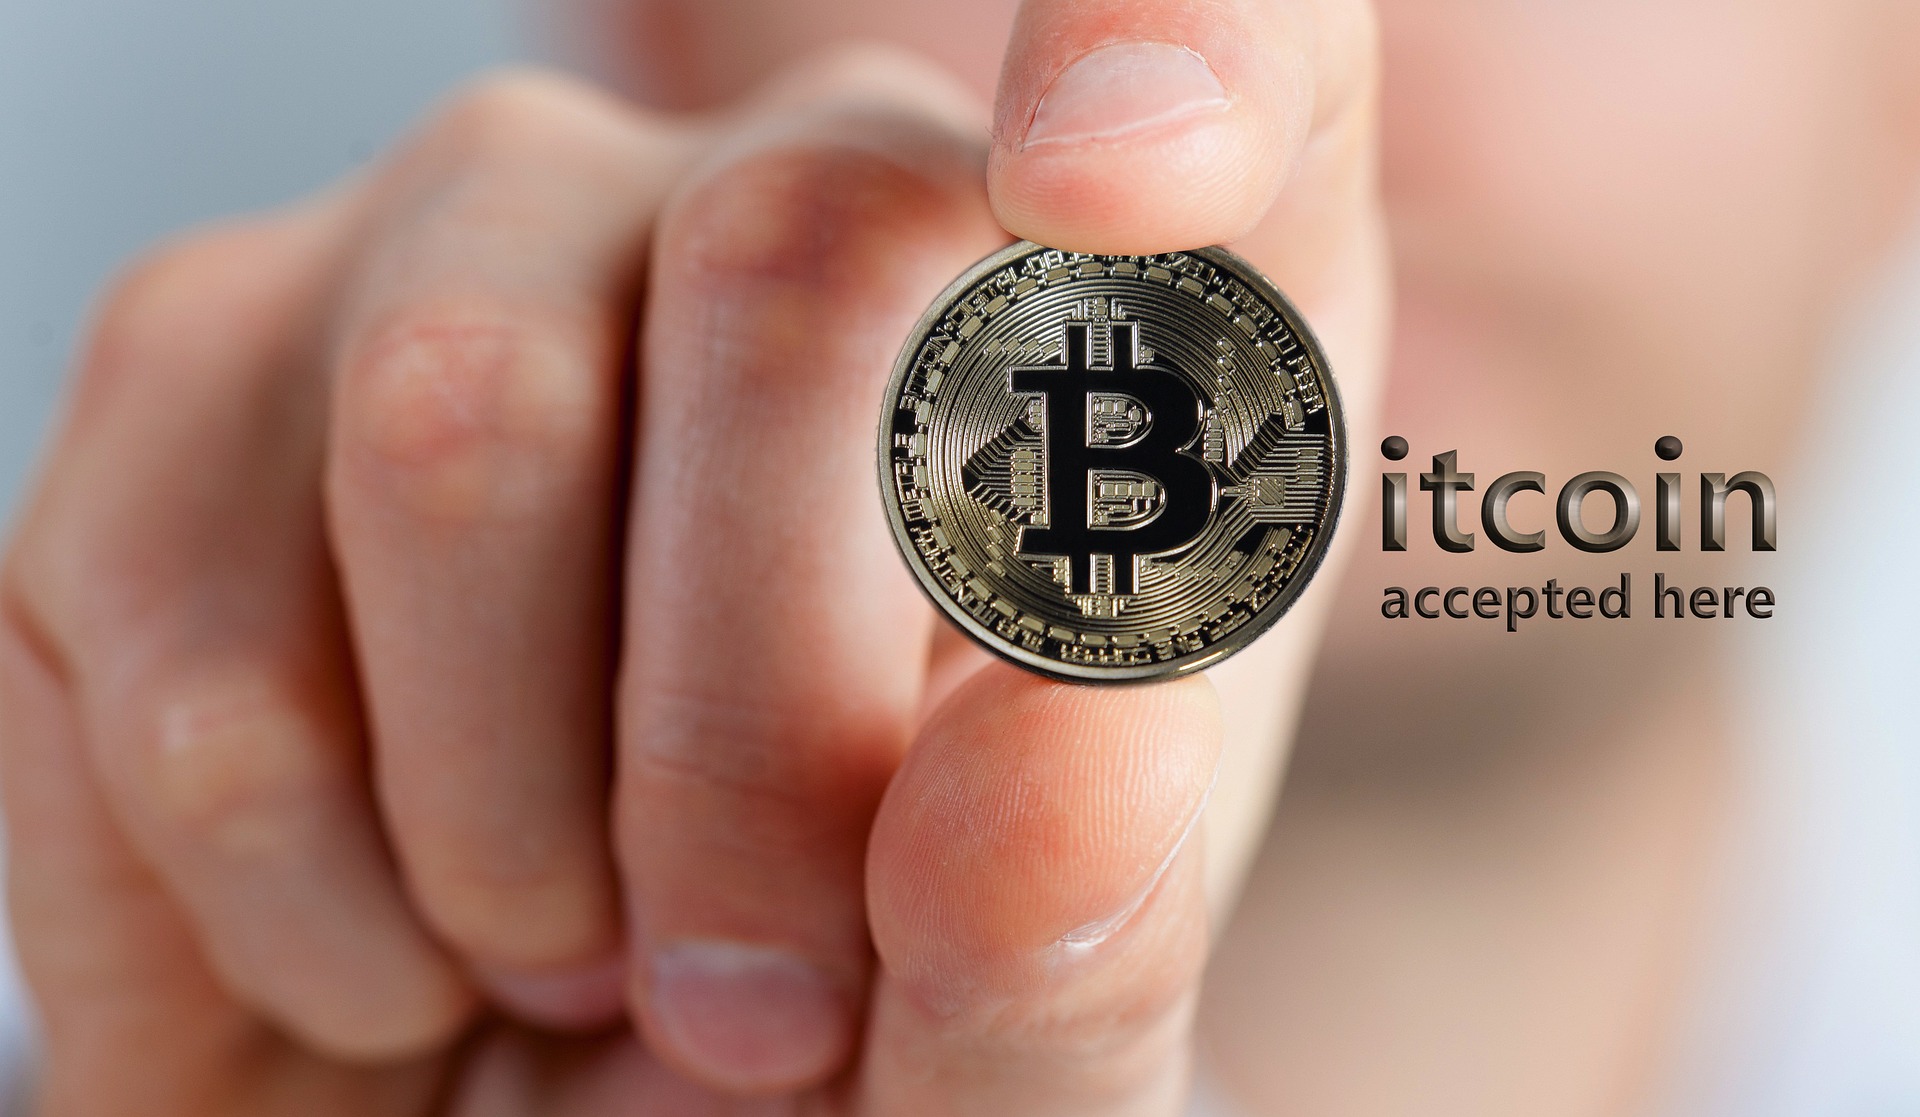 accept payments via bitcoin